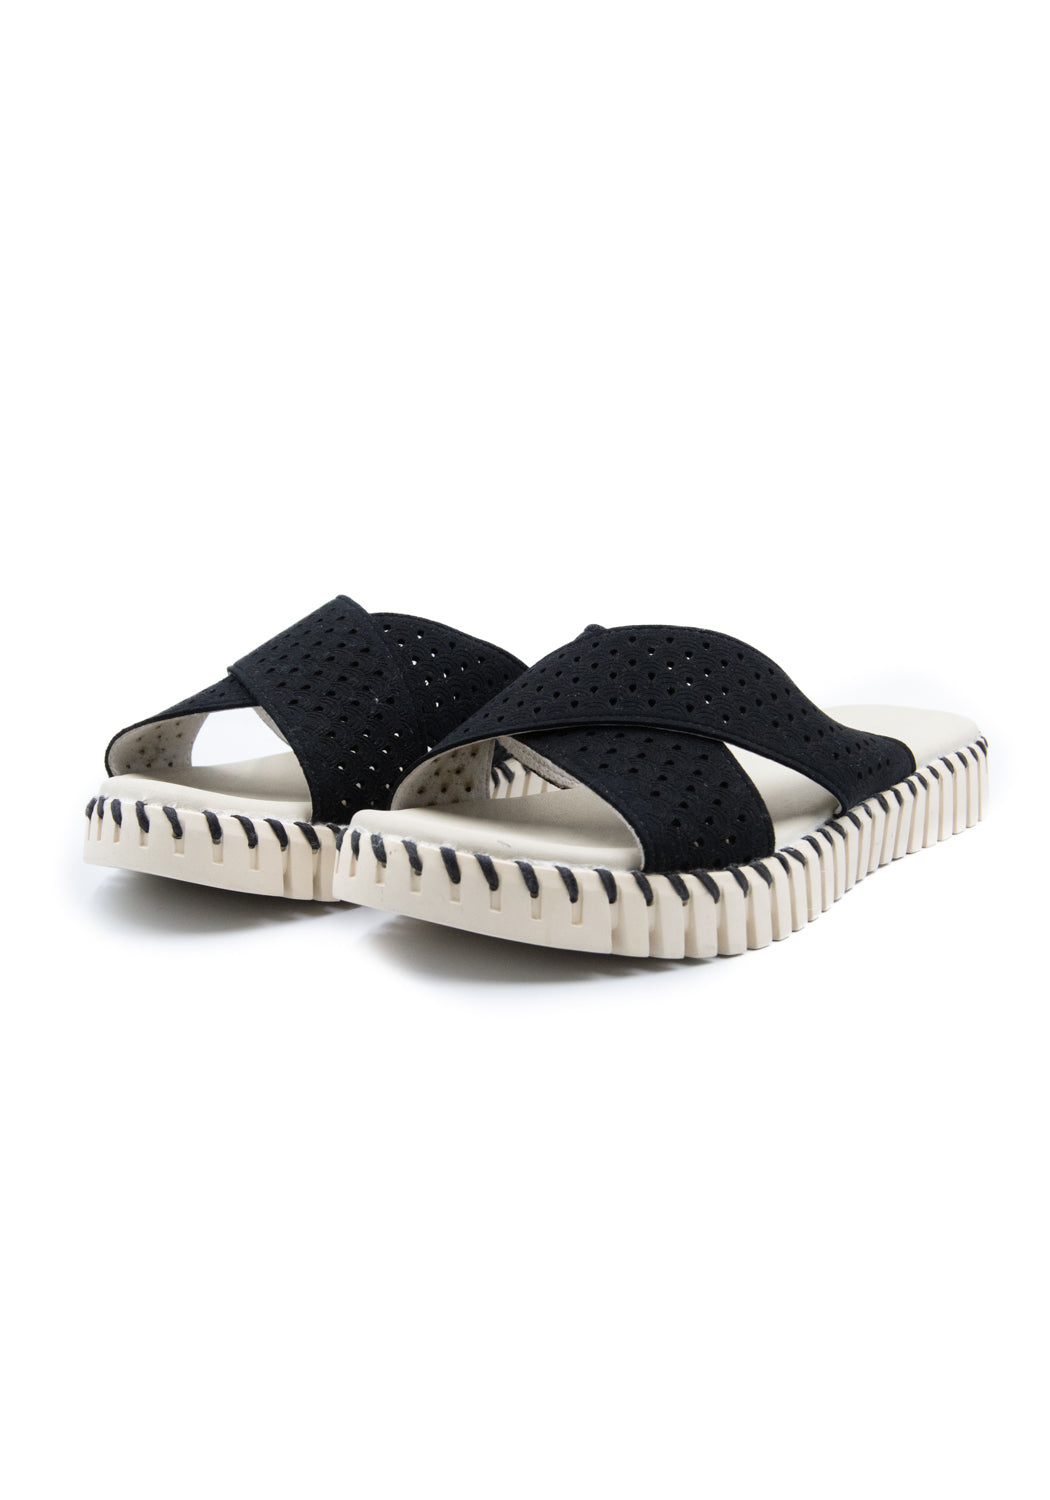 TULIP 1575 Sandals black | Bildmaterial bereitgestellt von SHOES.PLEASE.